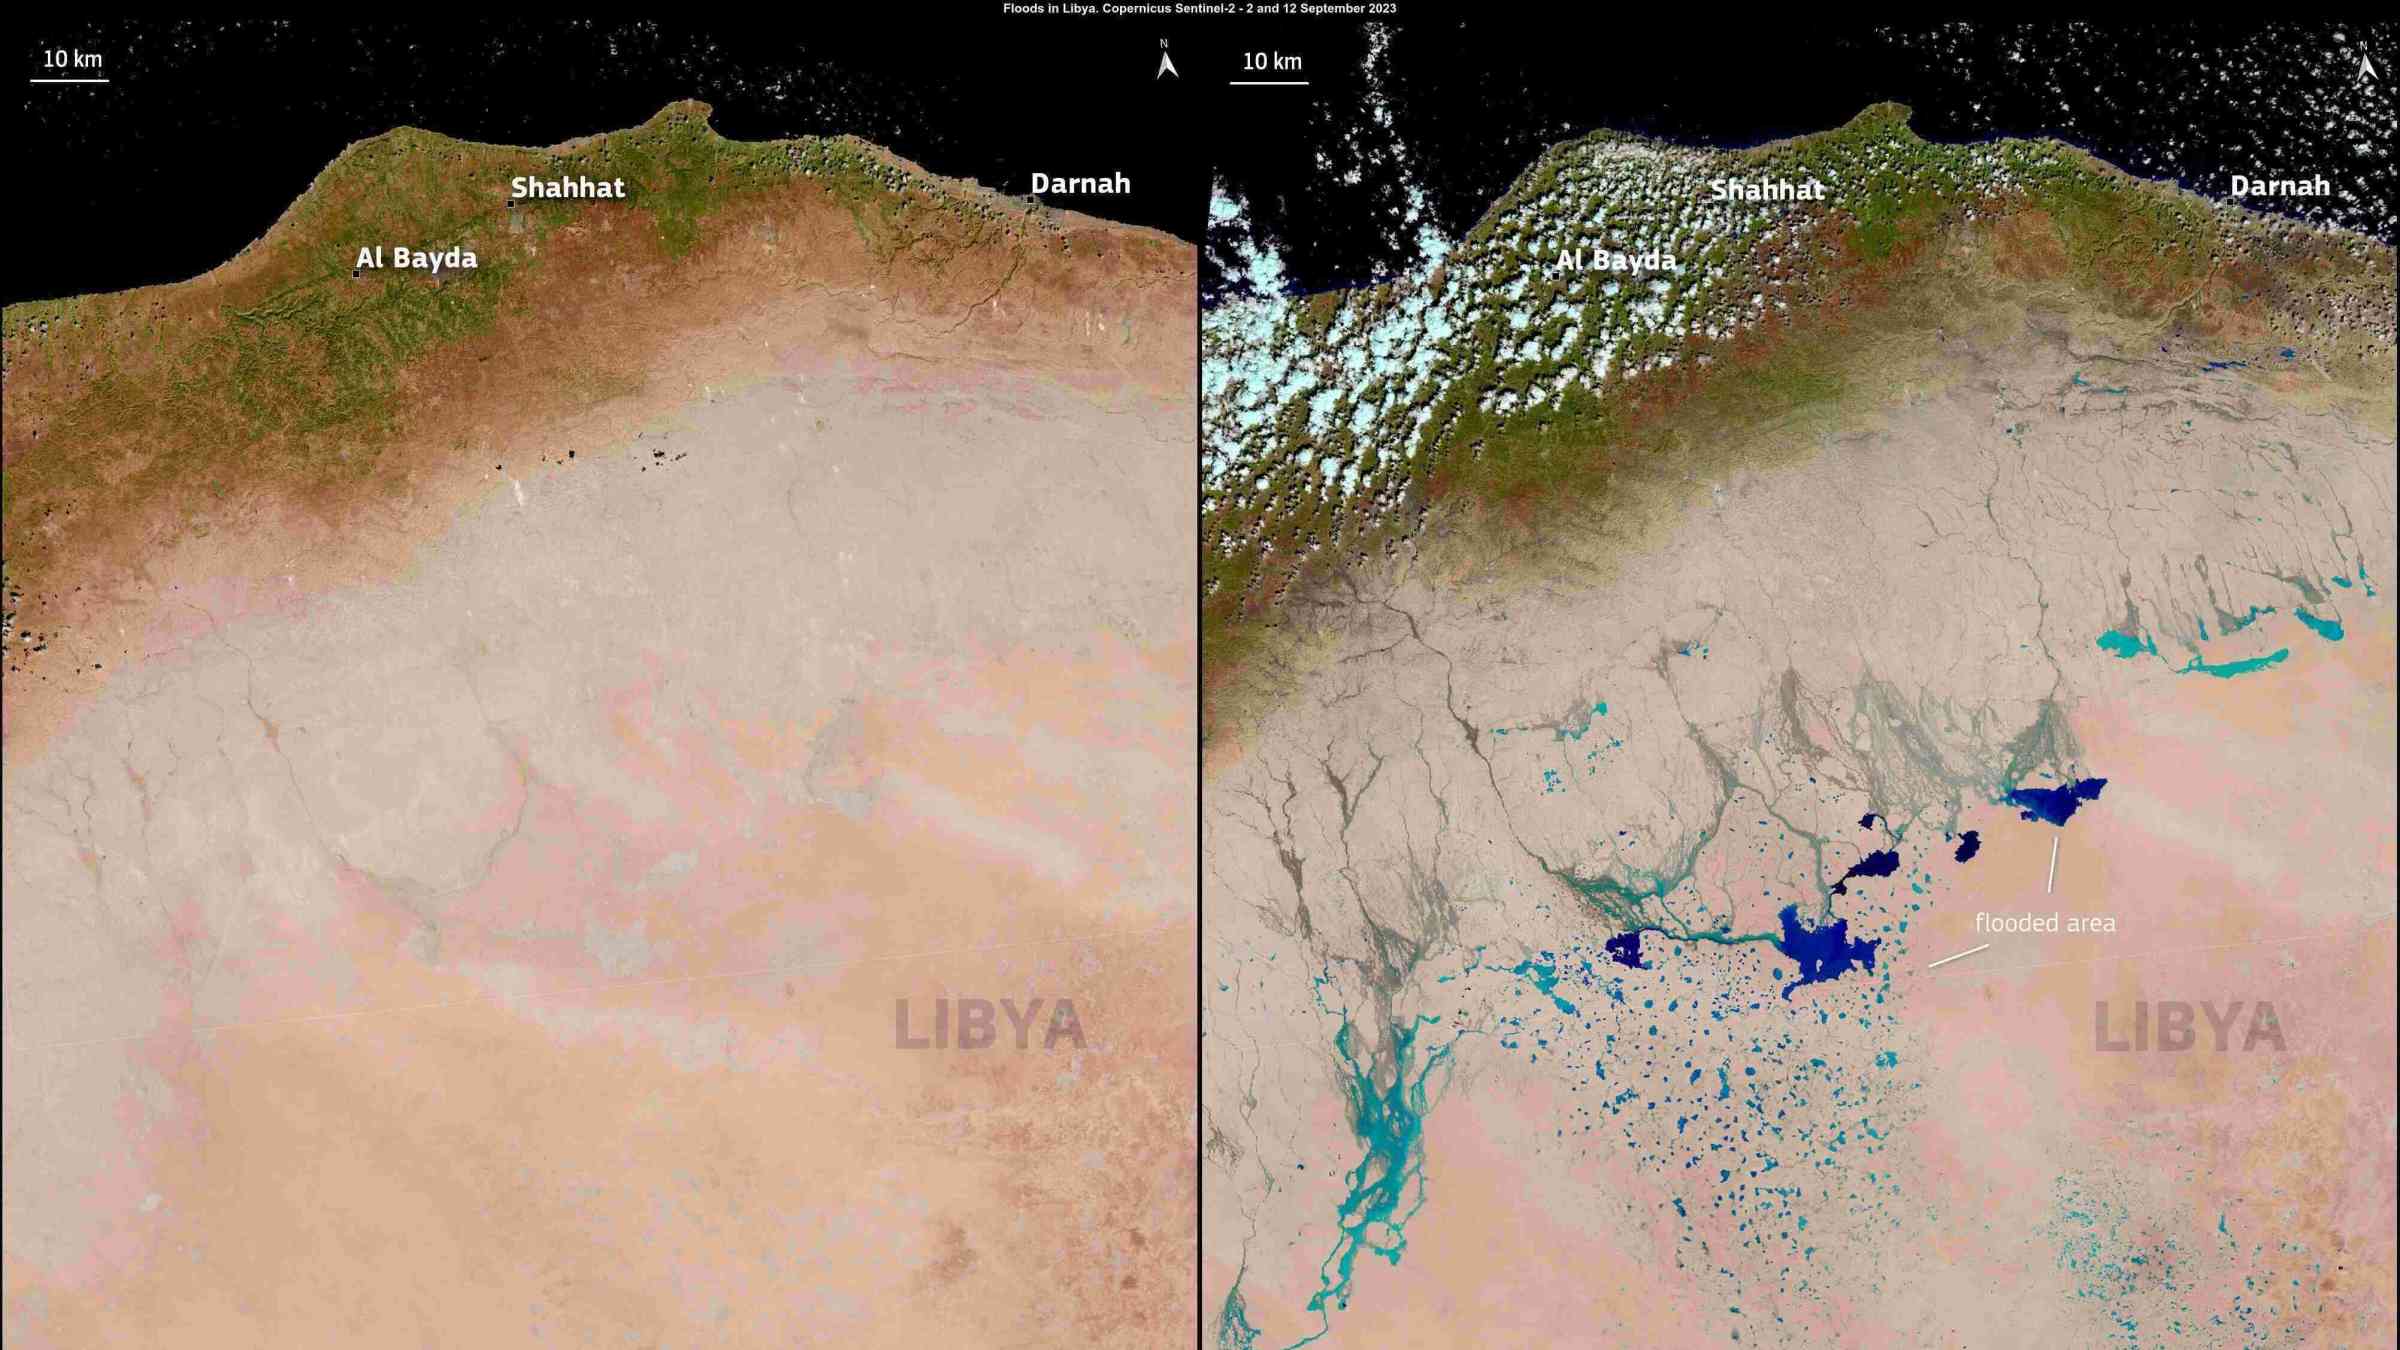 Storm Daniel Causes Flooding in Libya